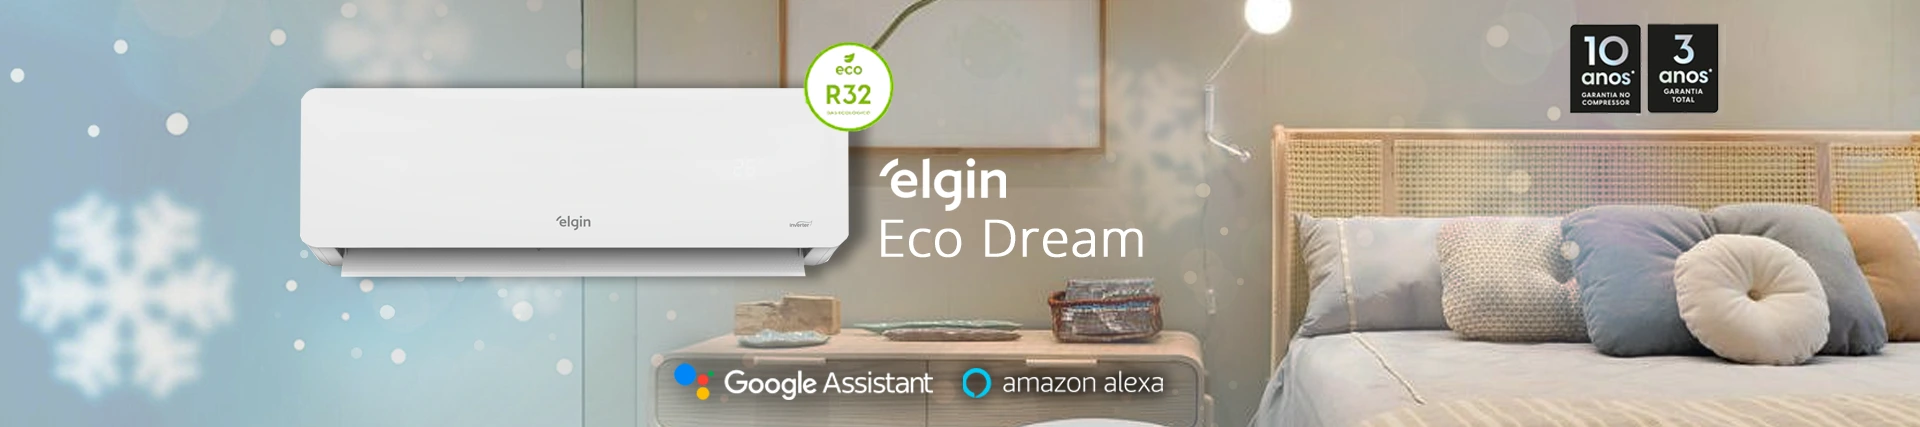 banner desktop Elgin Eco Dream - Inverno